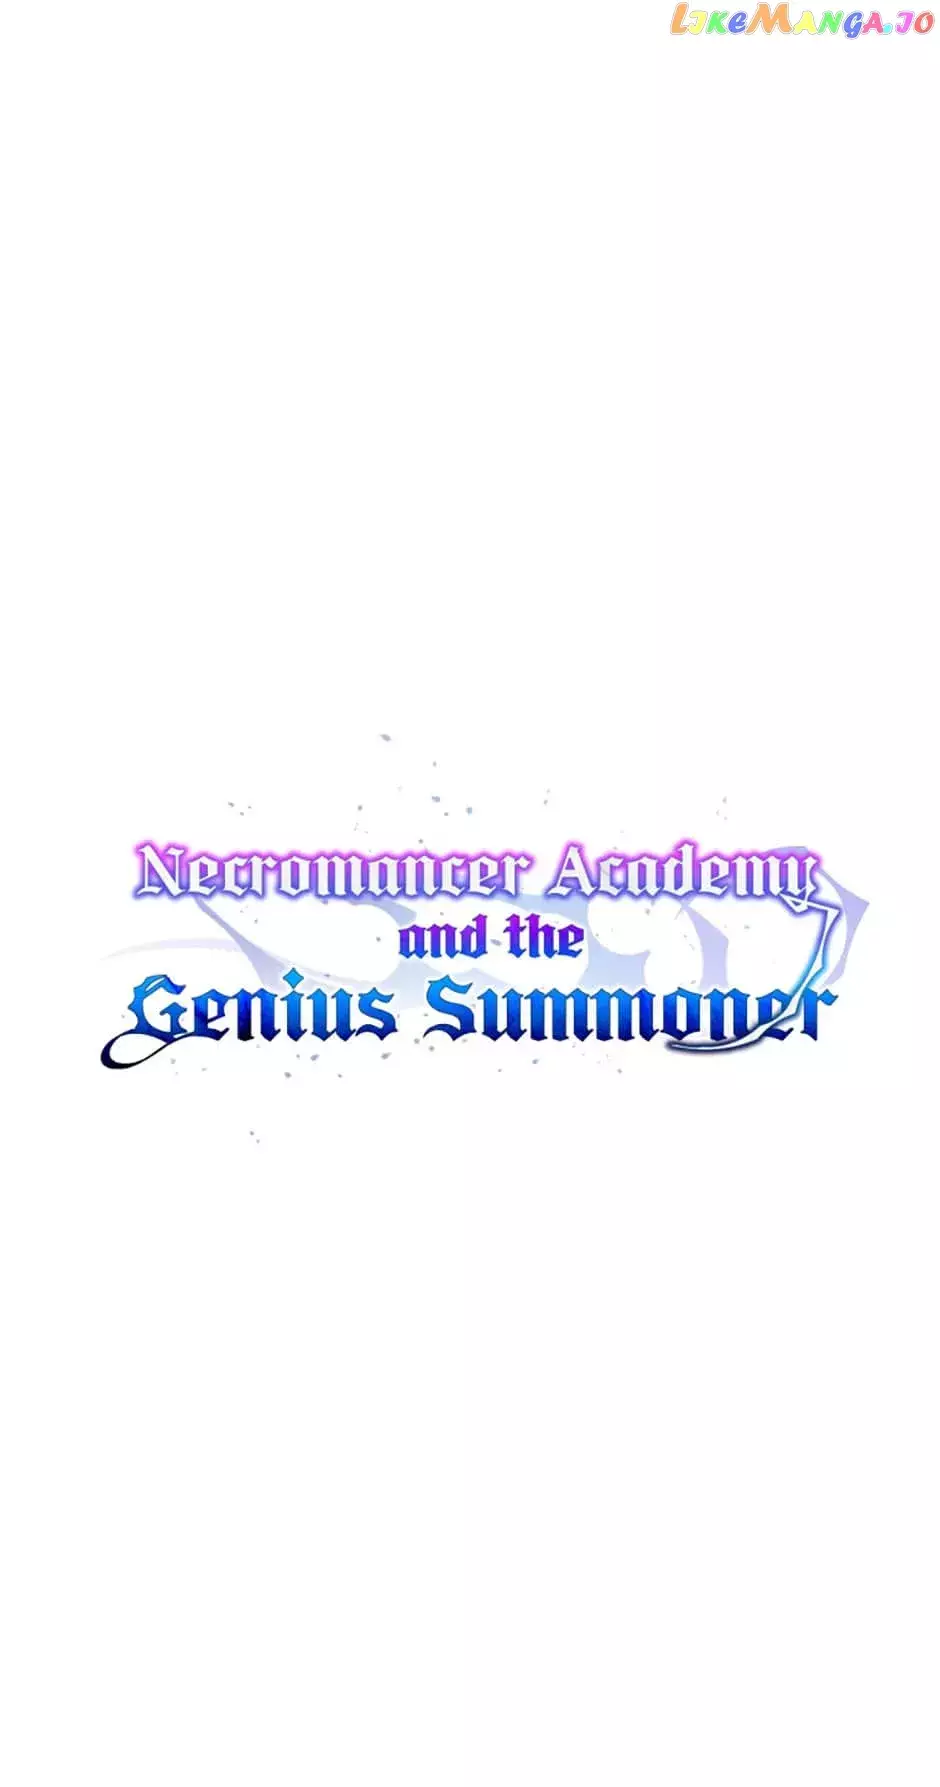 Necromancer Academy And The Genius Summoner - 62 page 10-71504ba5